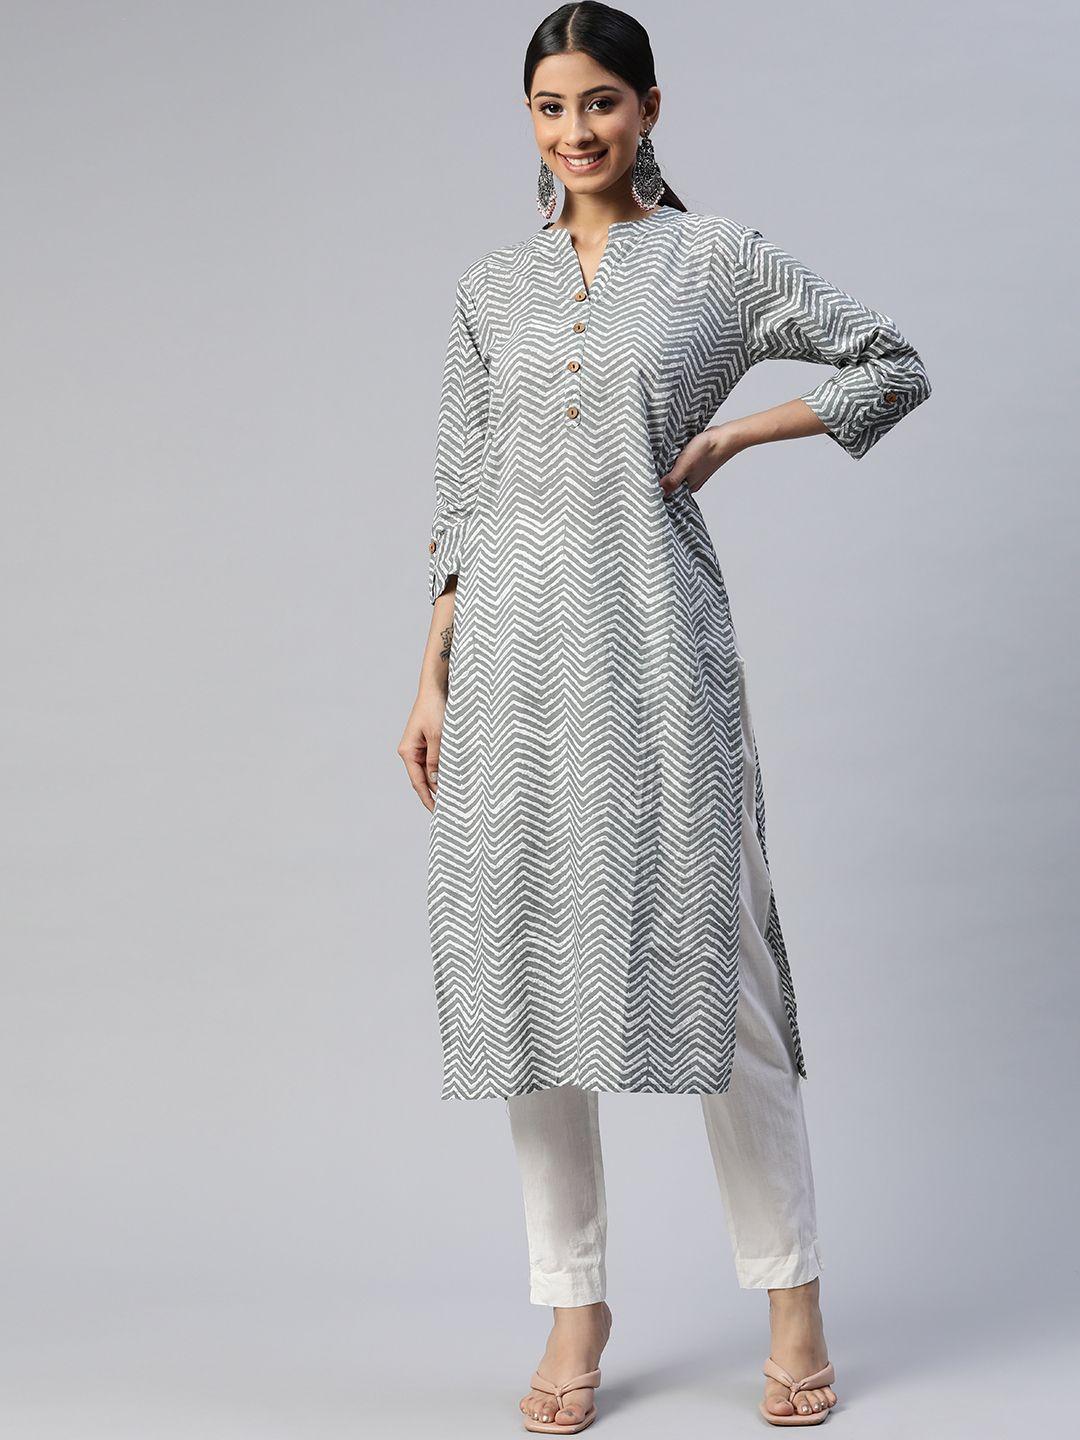 svarchi-women-khaki-&-white-chevron-printed-cotton-kurta